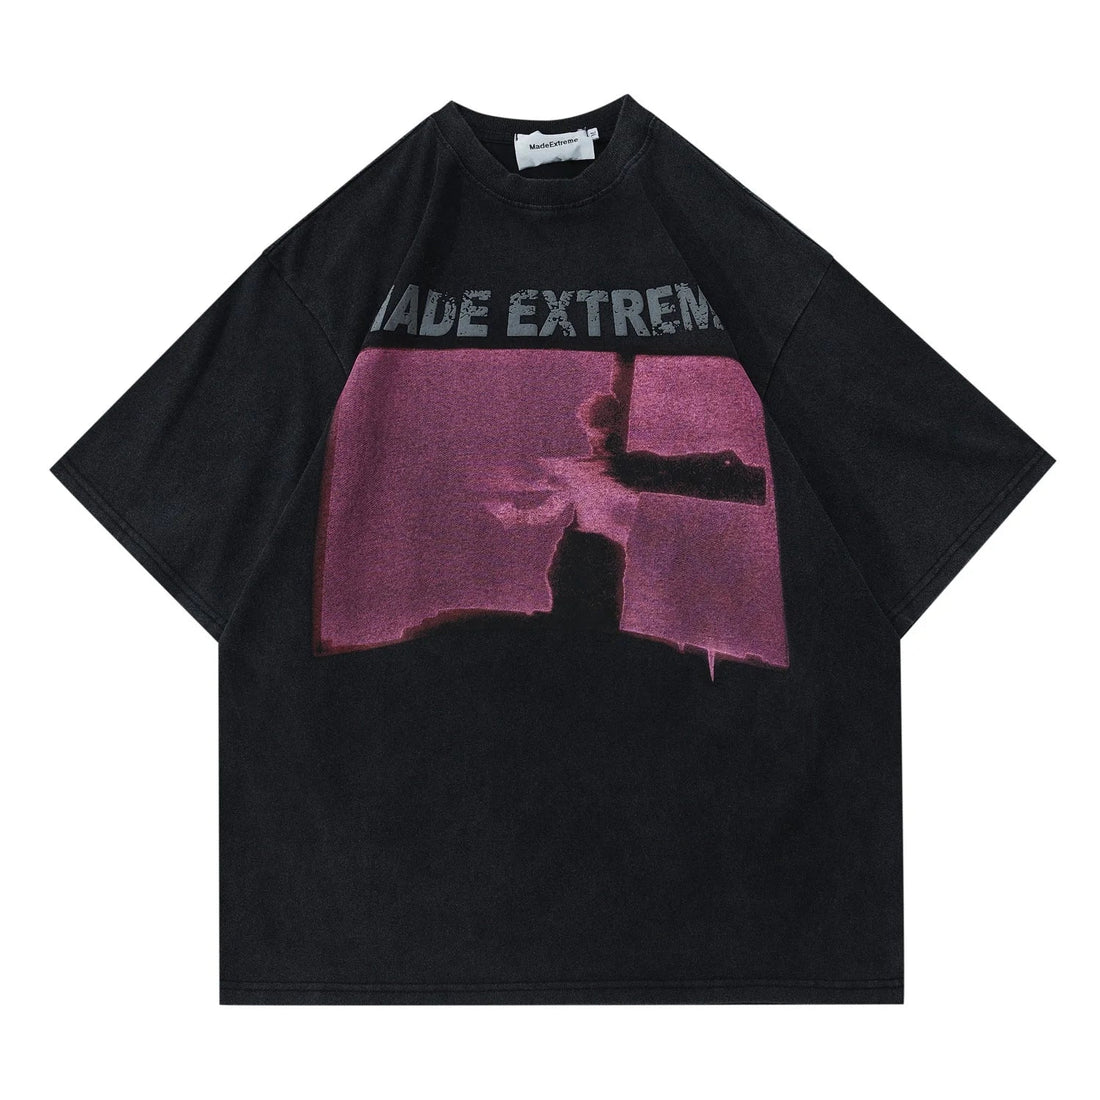 Streetwear Unisex Made Extreme Blurred Shirt - Fuga Studios